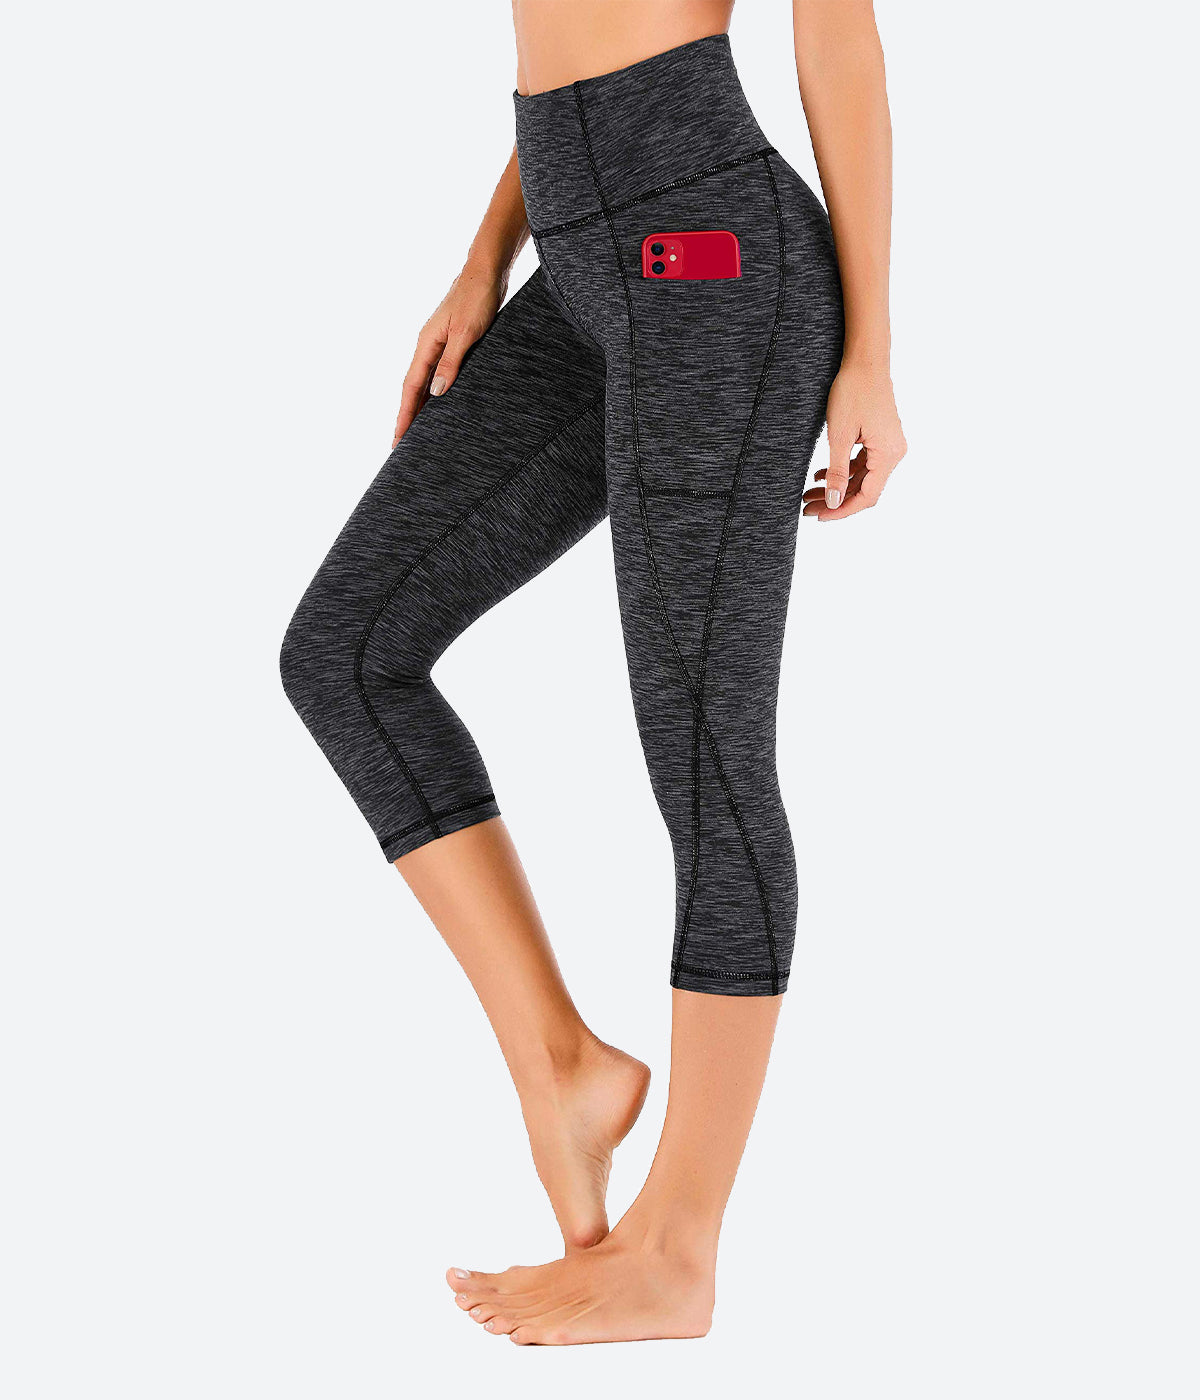 BeautyIn Leggings with Pockets for Women Yoga Pants High Waisted Workout  Capri 